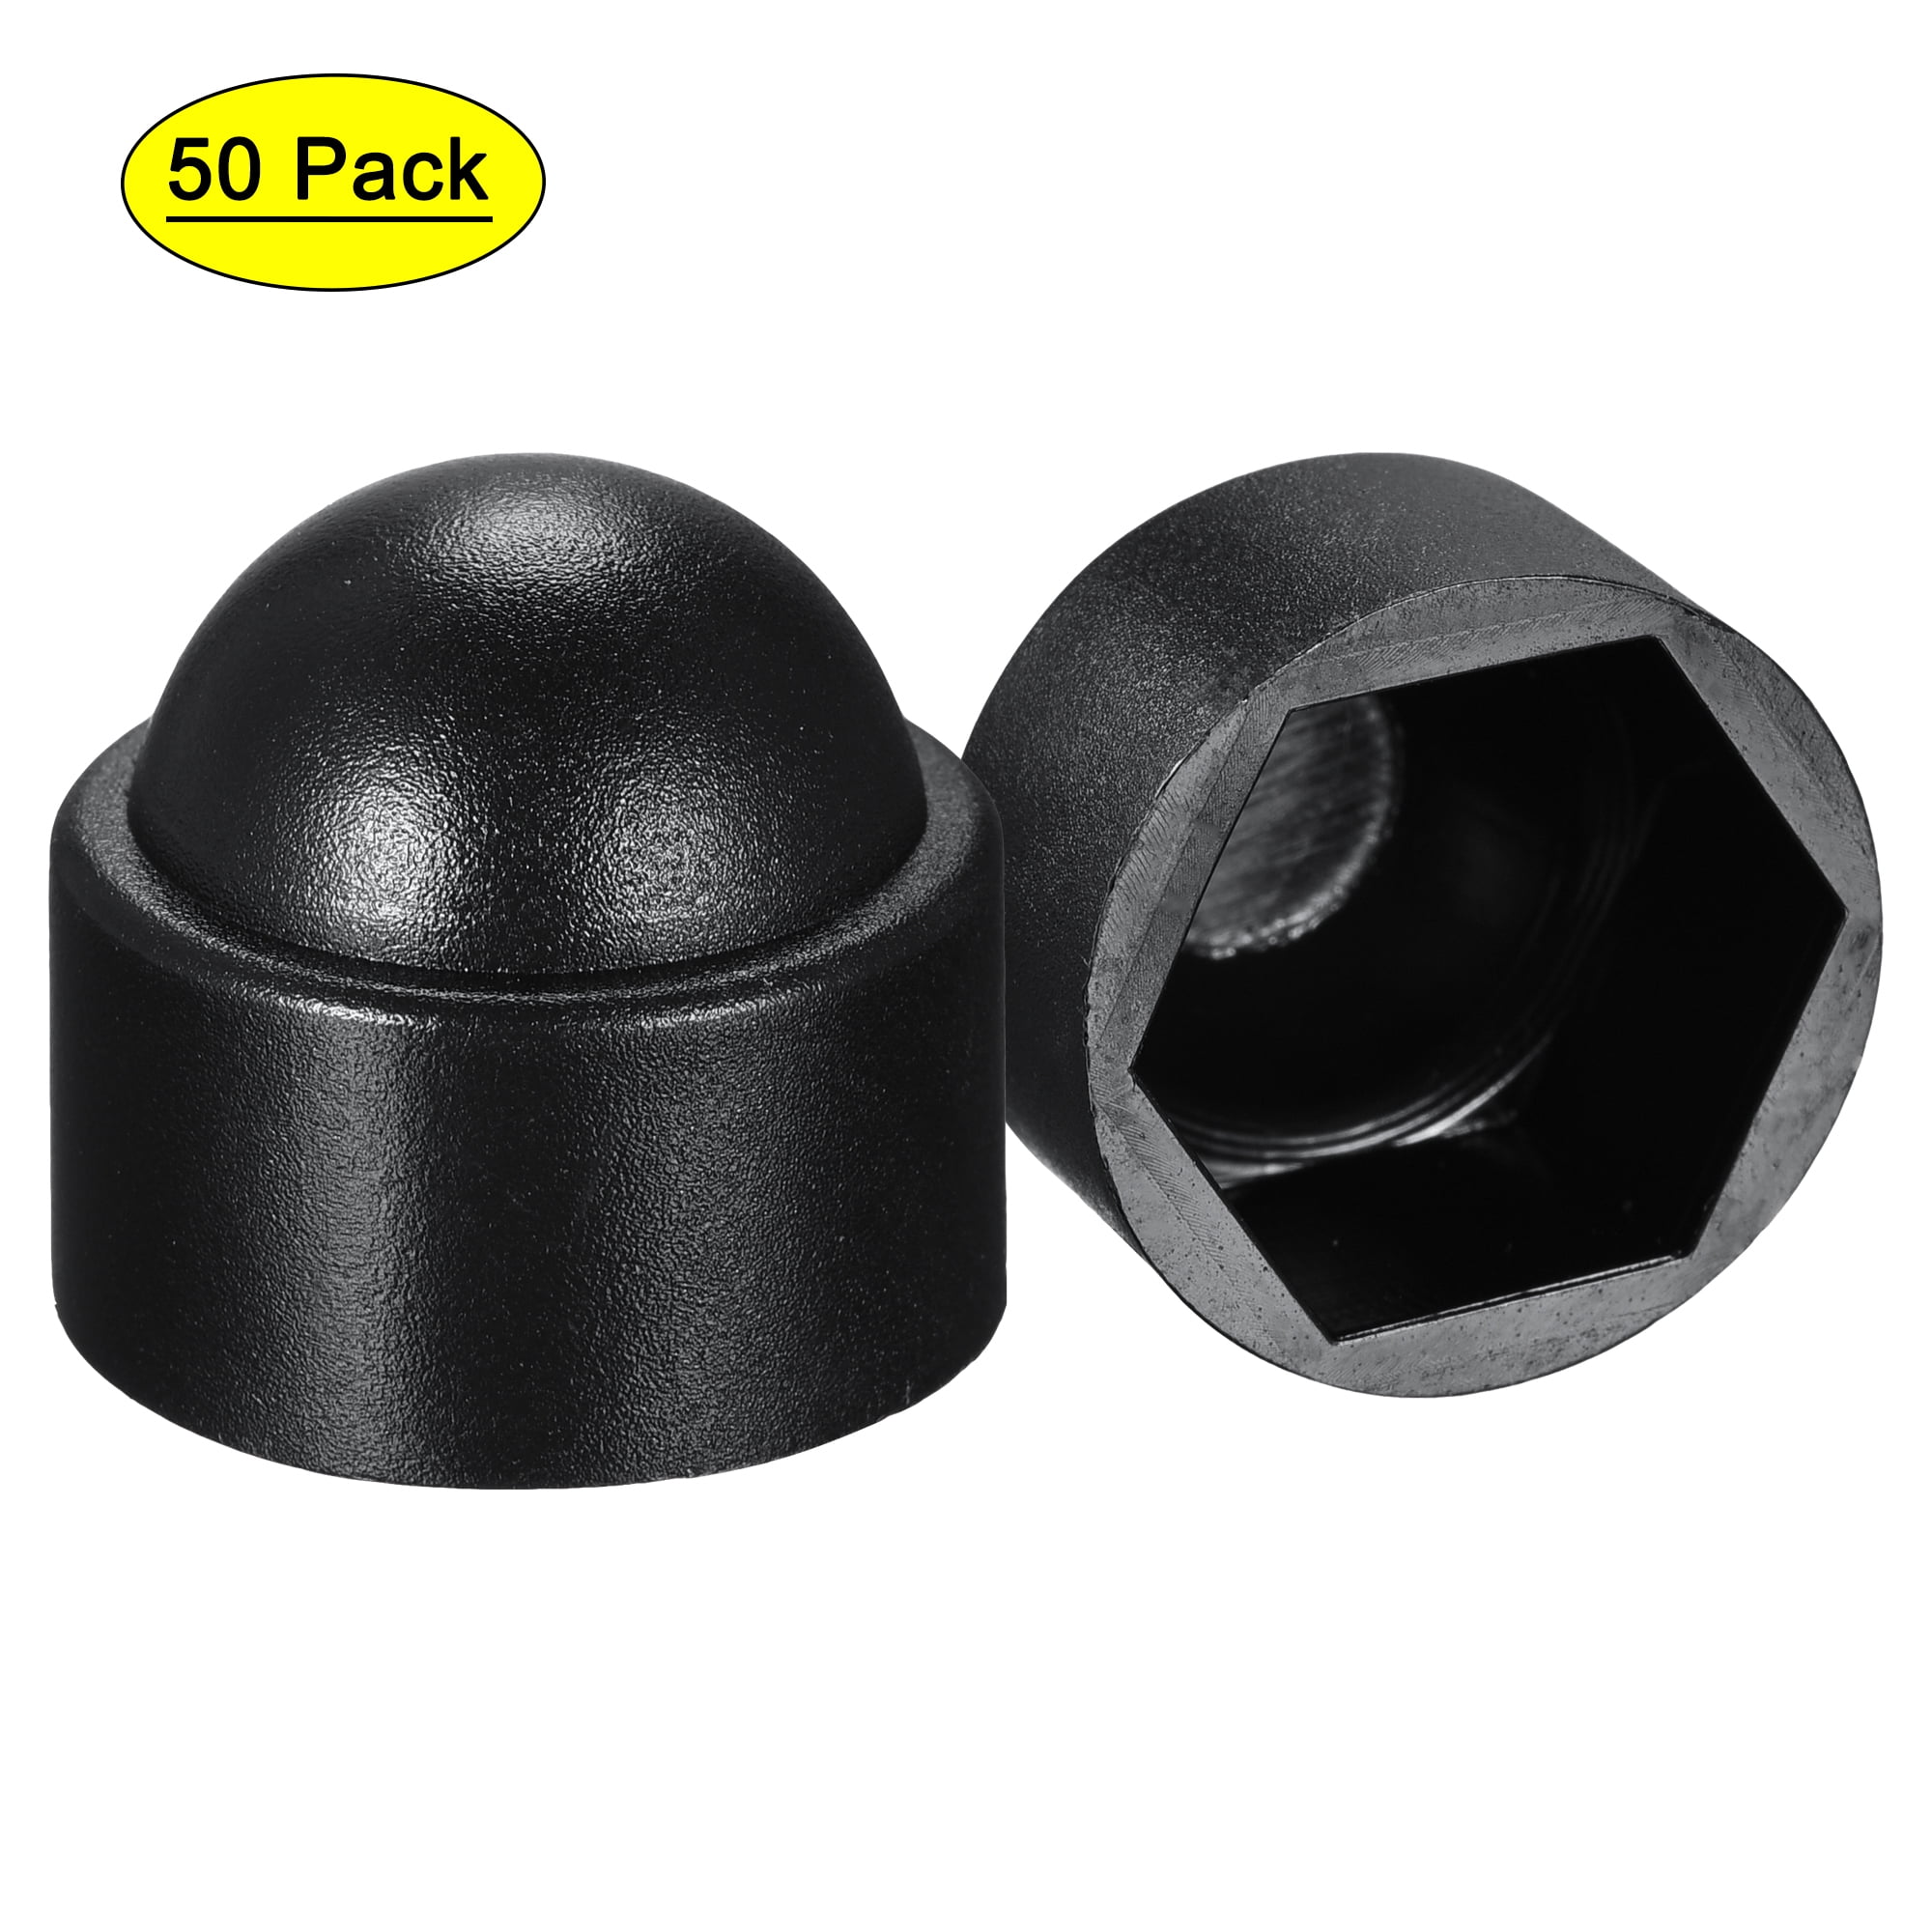 M12 19mm NUT BOLT SCREW DOME PROTECTOR HEX HEAD COVER CAPS BLACK PLASTIC 